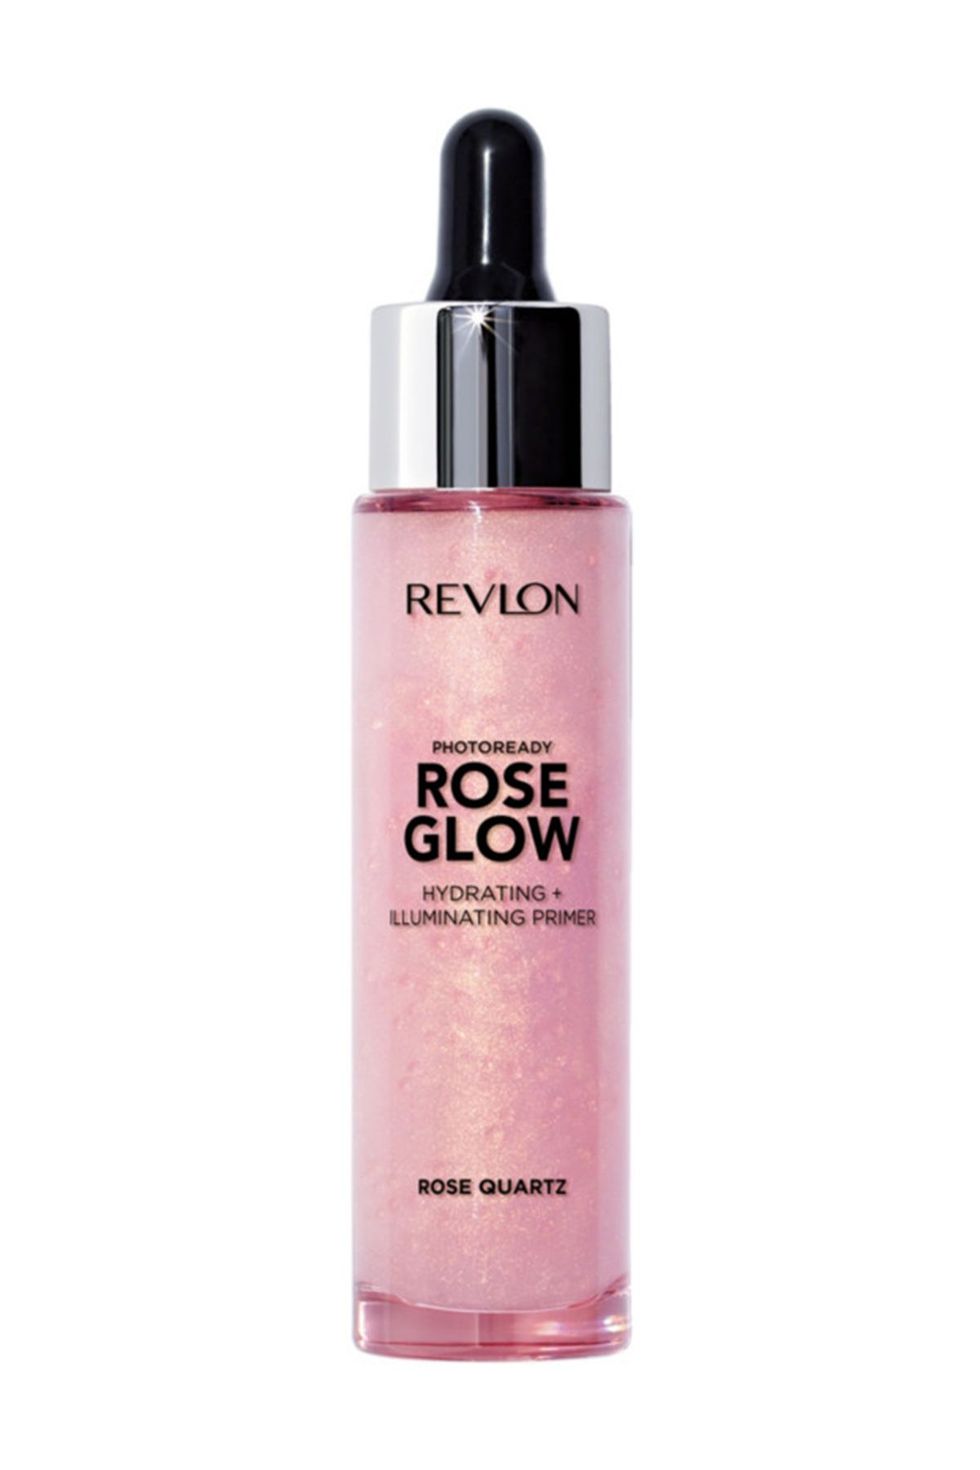 Best for Sheer Coverage: Revlon PhotoReady Rose Glow Hydrating + Illuminating Primer